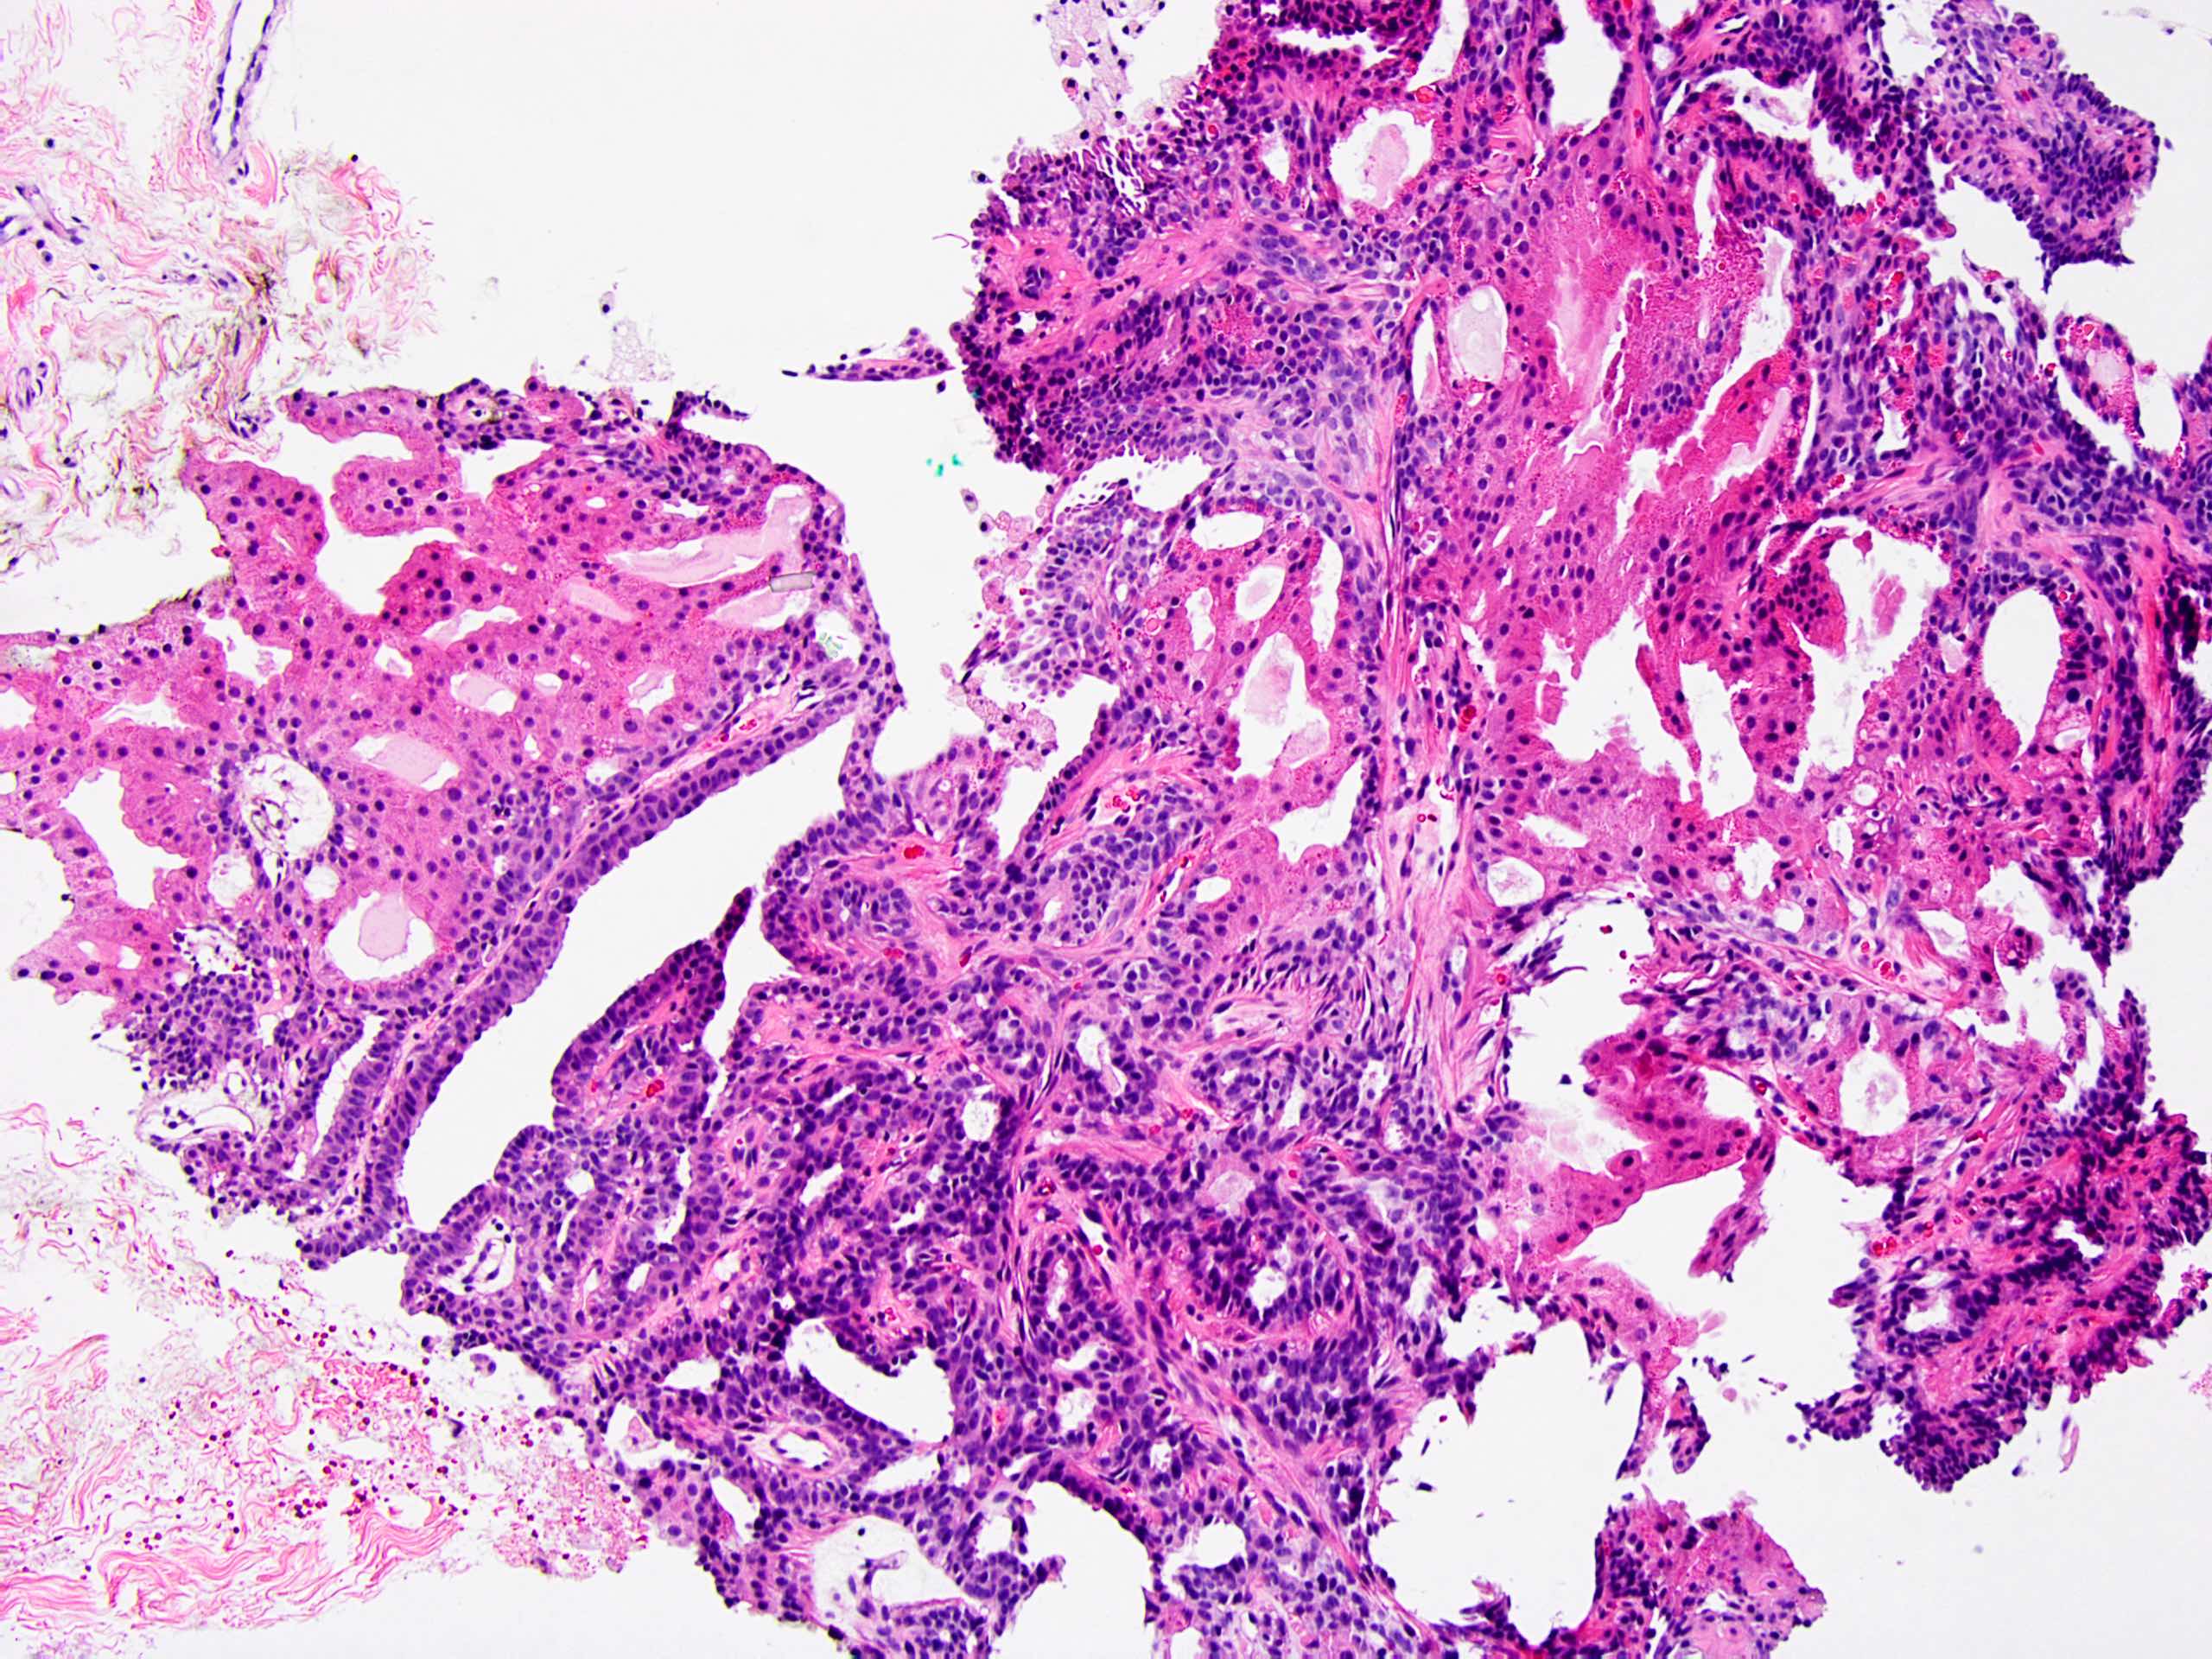 intraductal papilloma malignant potential